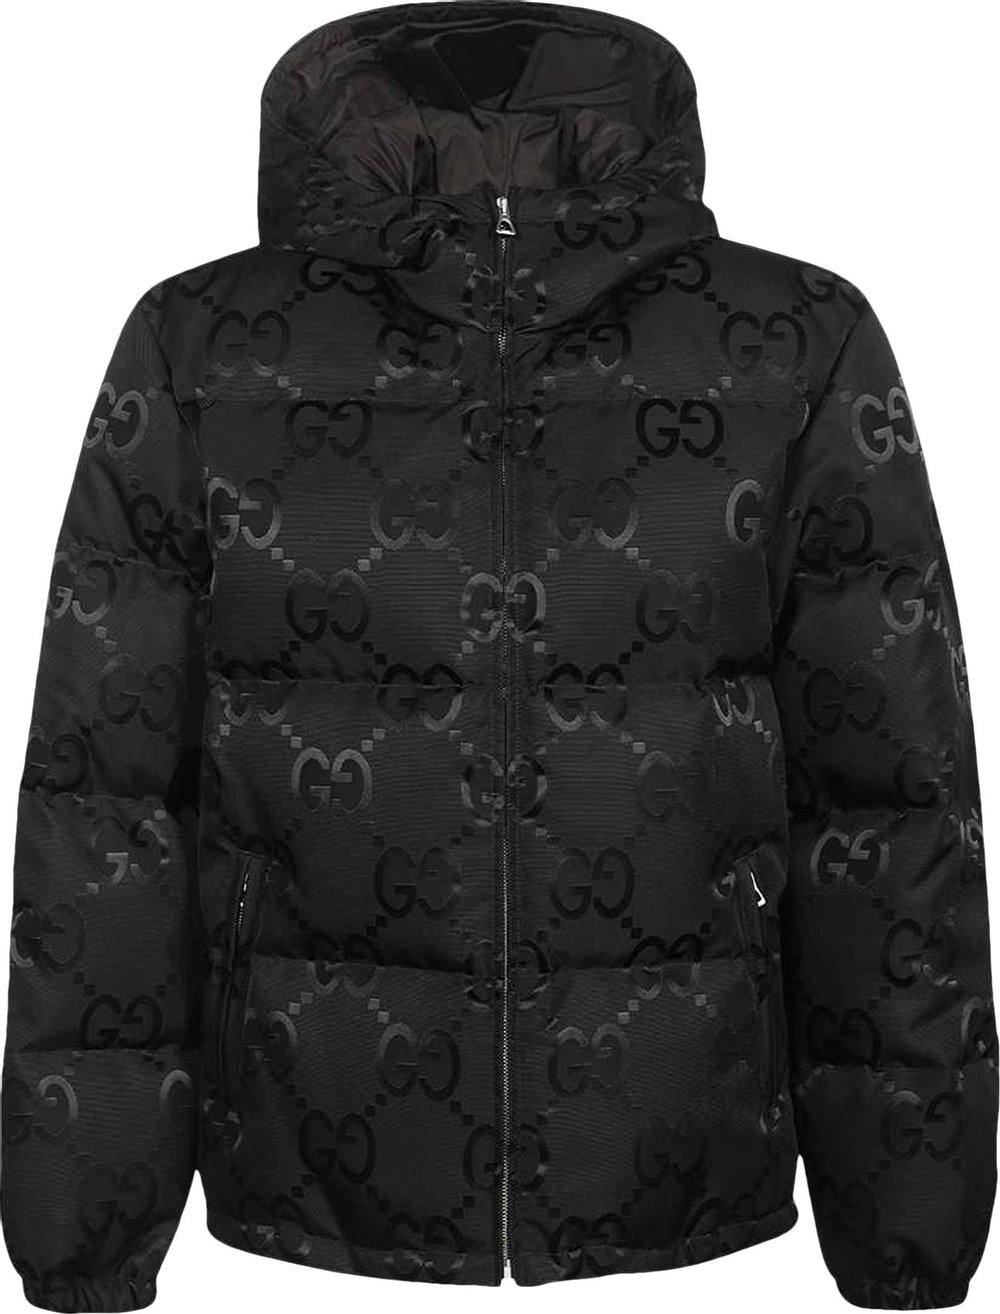 Buy Gucci Jumbo GG Canvas Down Jacket 'Black' - 698710 Z8A2S 1000 | GOAT